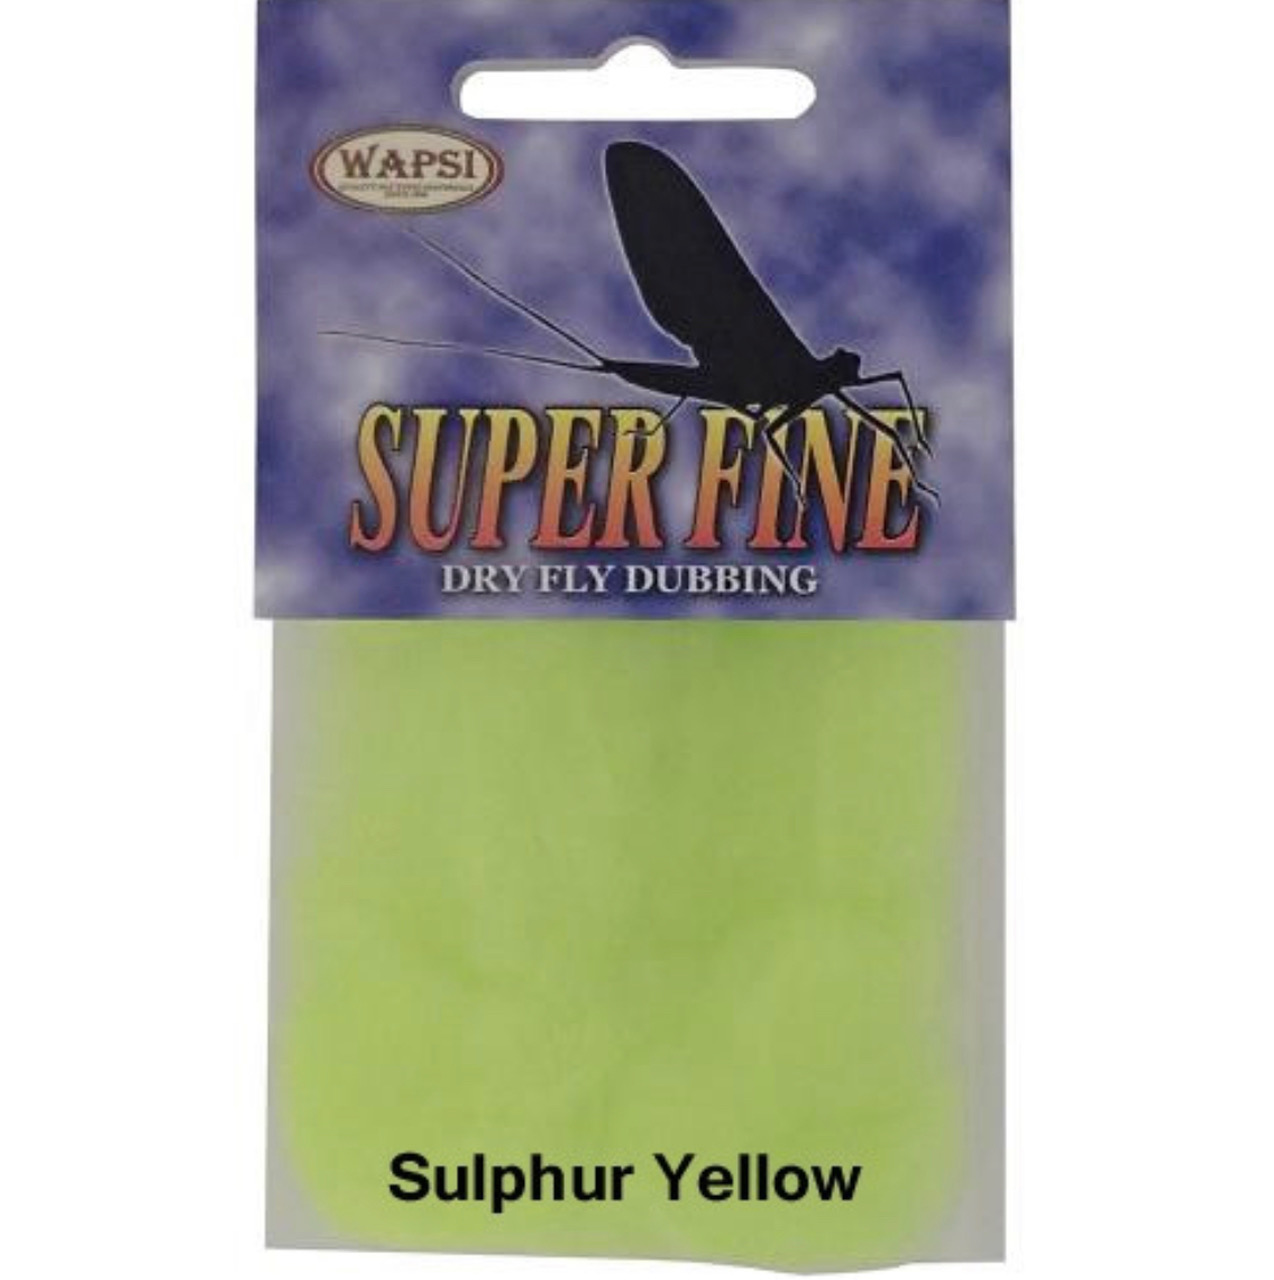 Wapsi Super Fine Dubbing - Sulphur Yellow